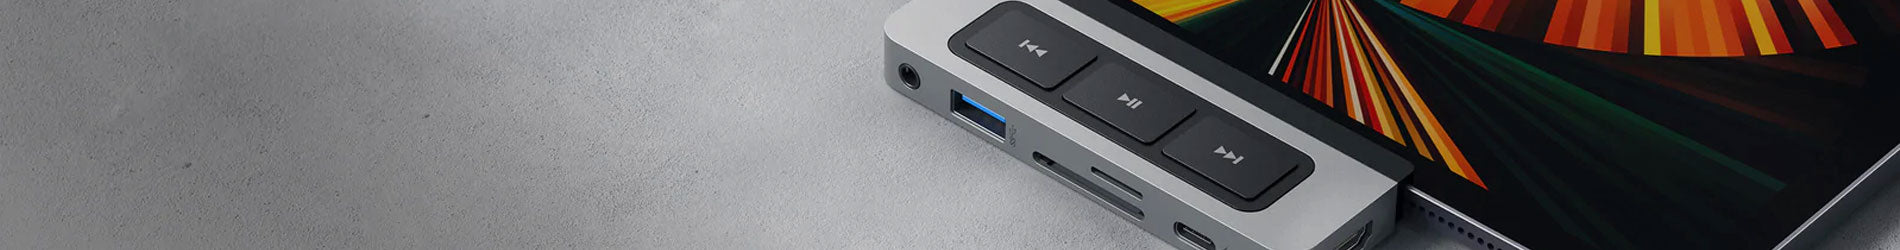 HyperDrive USB-C ハブ for iPad